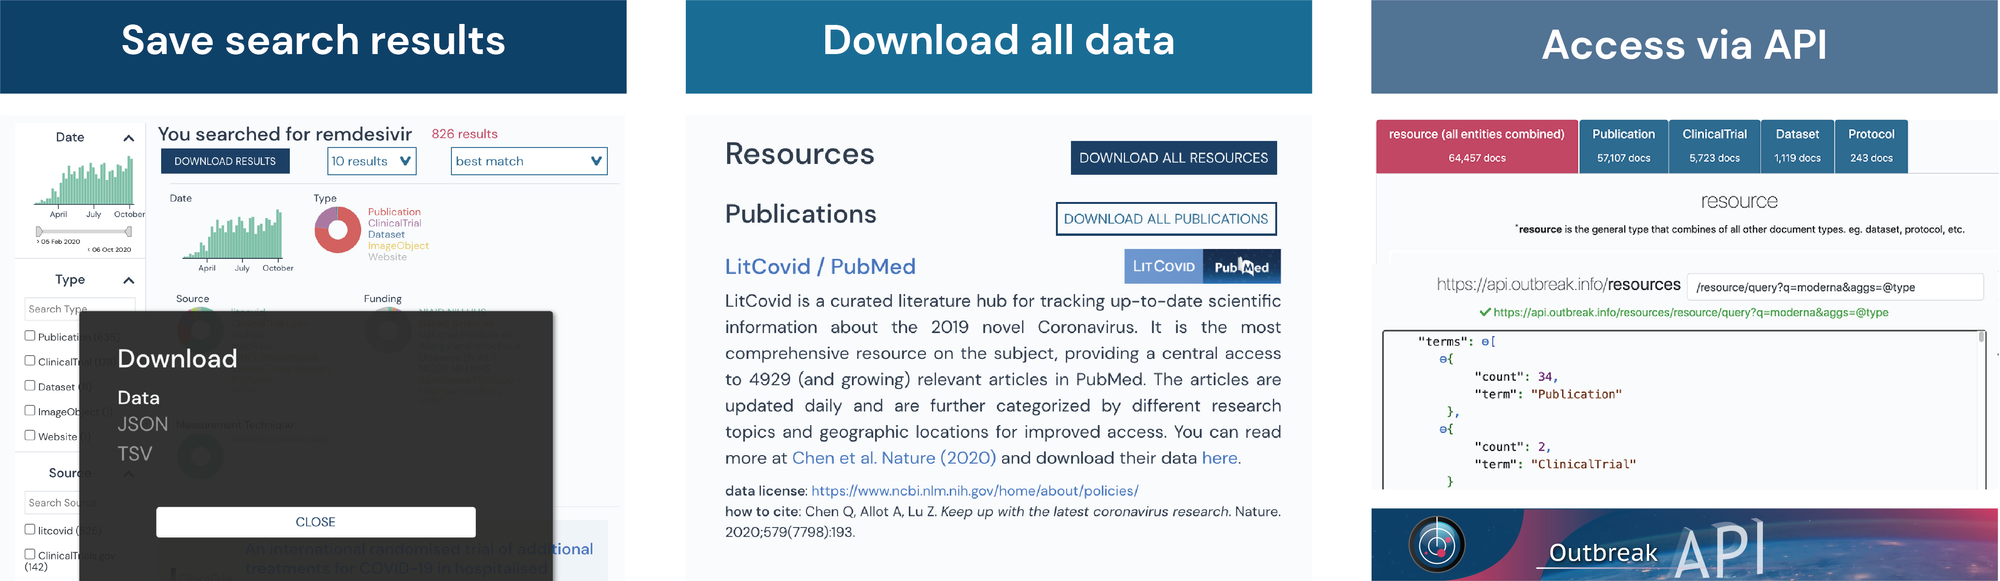 resources_downloads-1